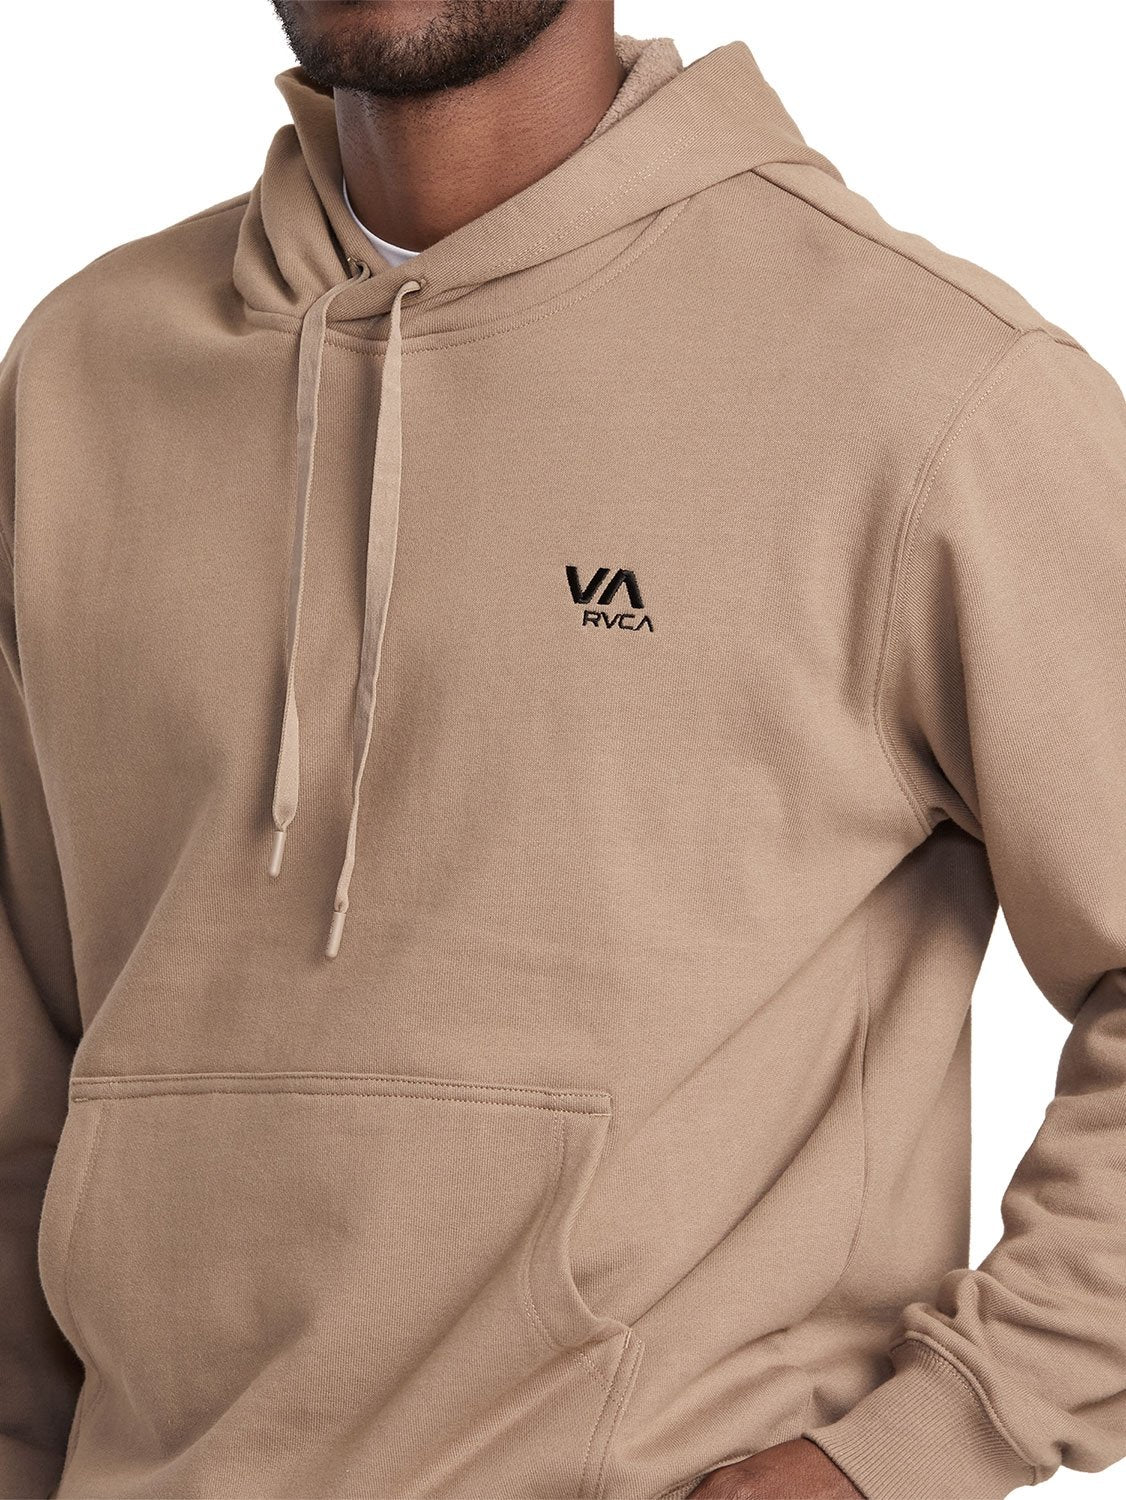 RVCA Men's VA Essentials Hoodie